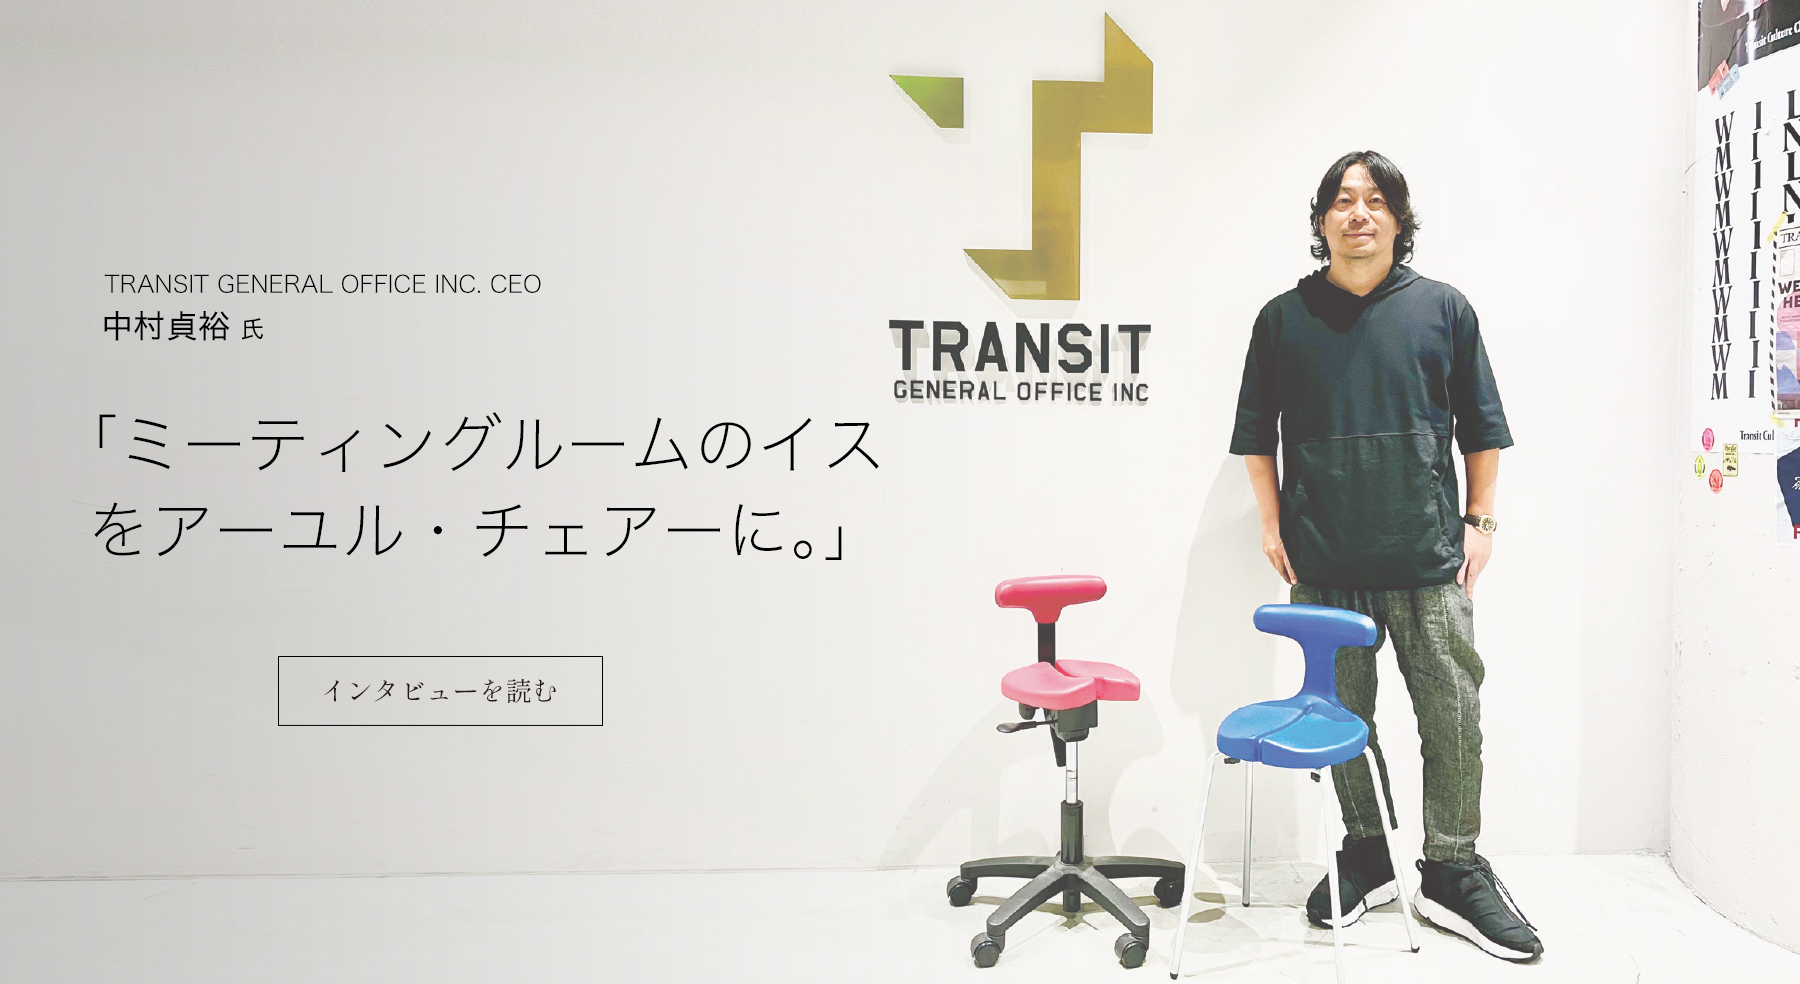 TRANSIT GENERAL OFFICE INC. CEO 中村貞裕氏「ミーティングルームのイスをアーユル・チェアーに。」